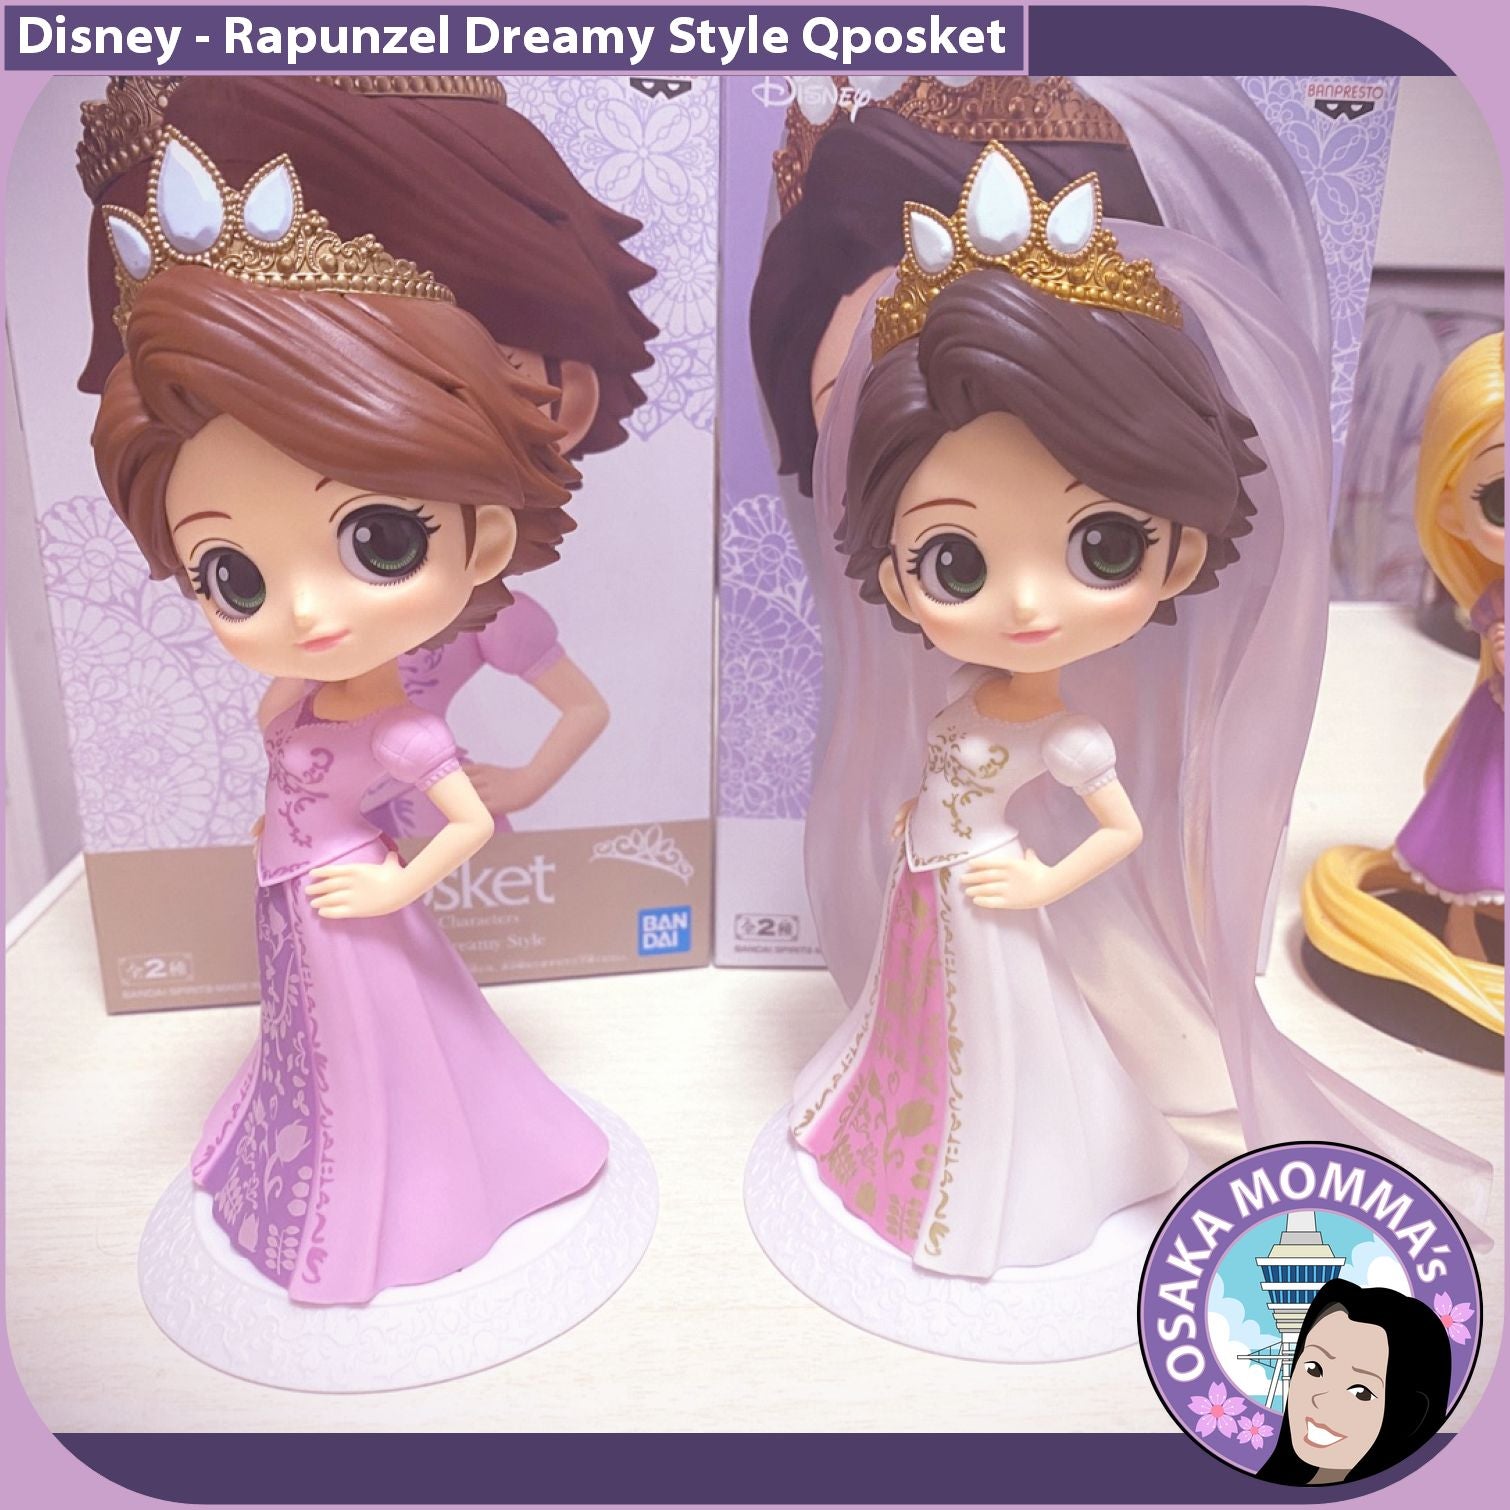 Rapunzel Dreamy Style Qposket